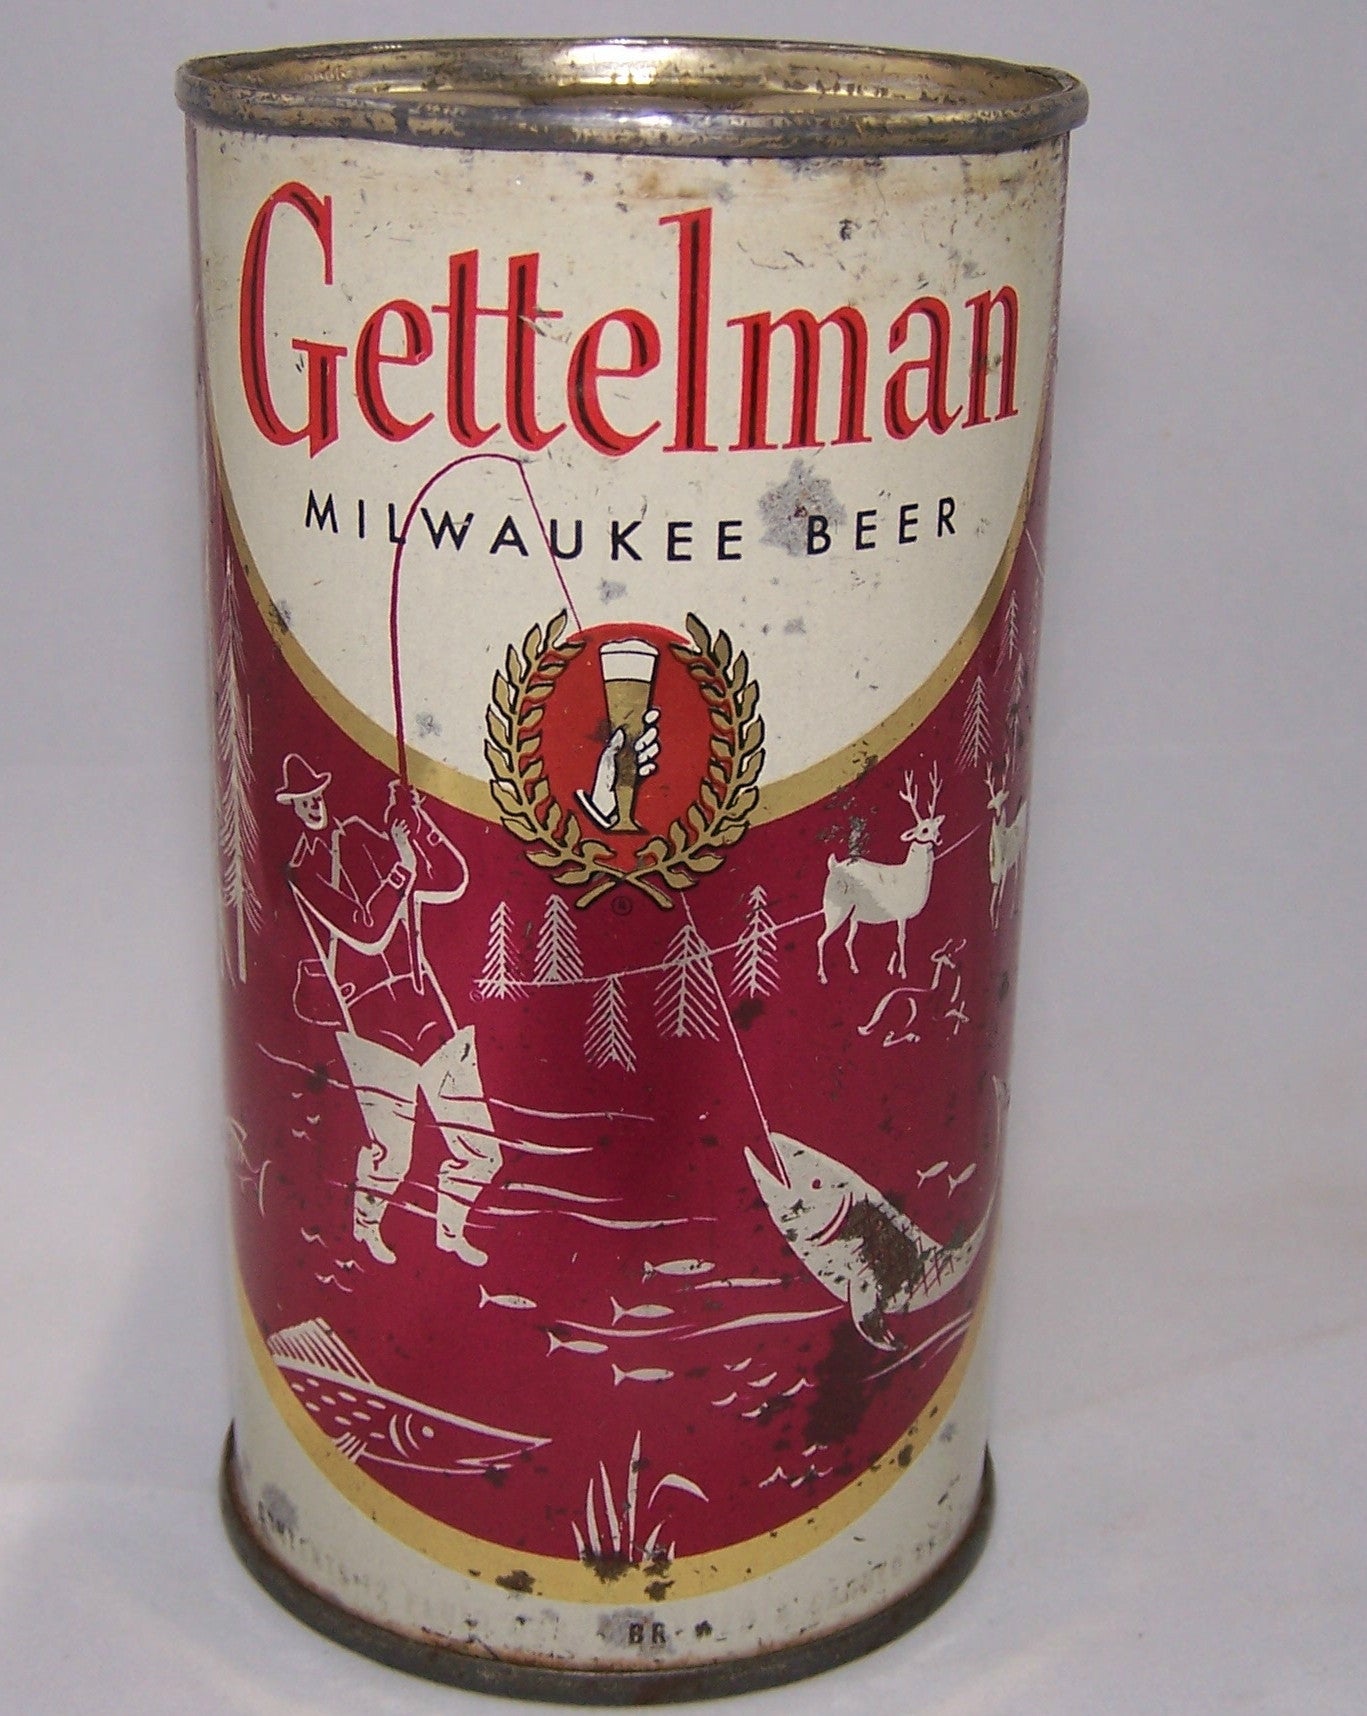 Gettelman Fishing set can, USBC 69-13, Grade 1- Sold on 9/2/15